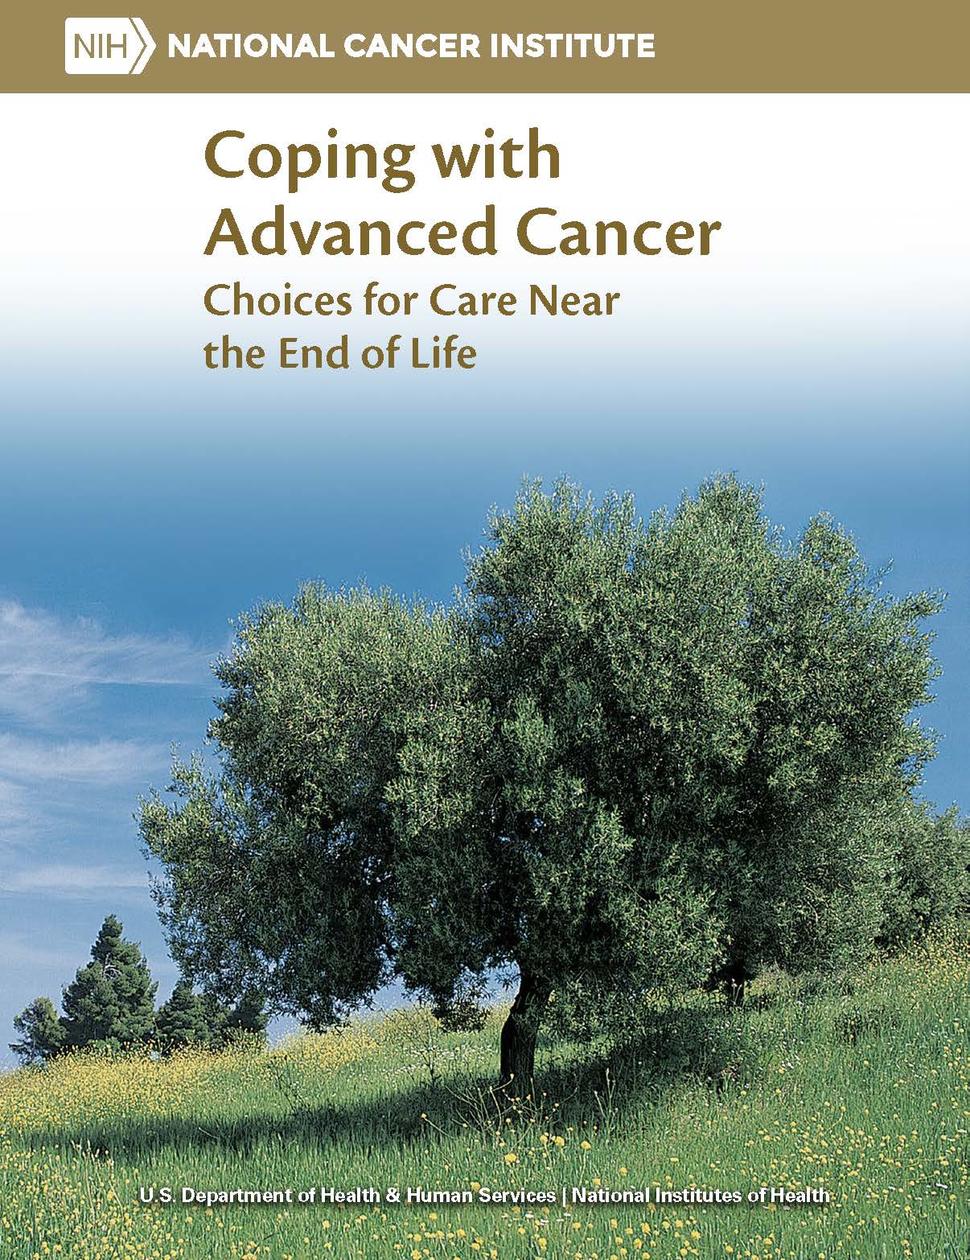 Choices for advanced cancer